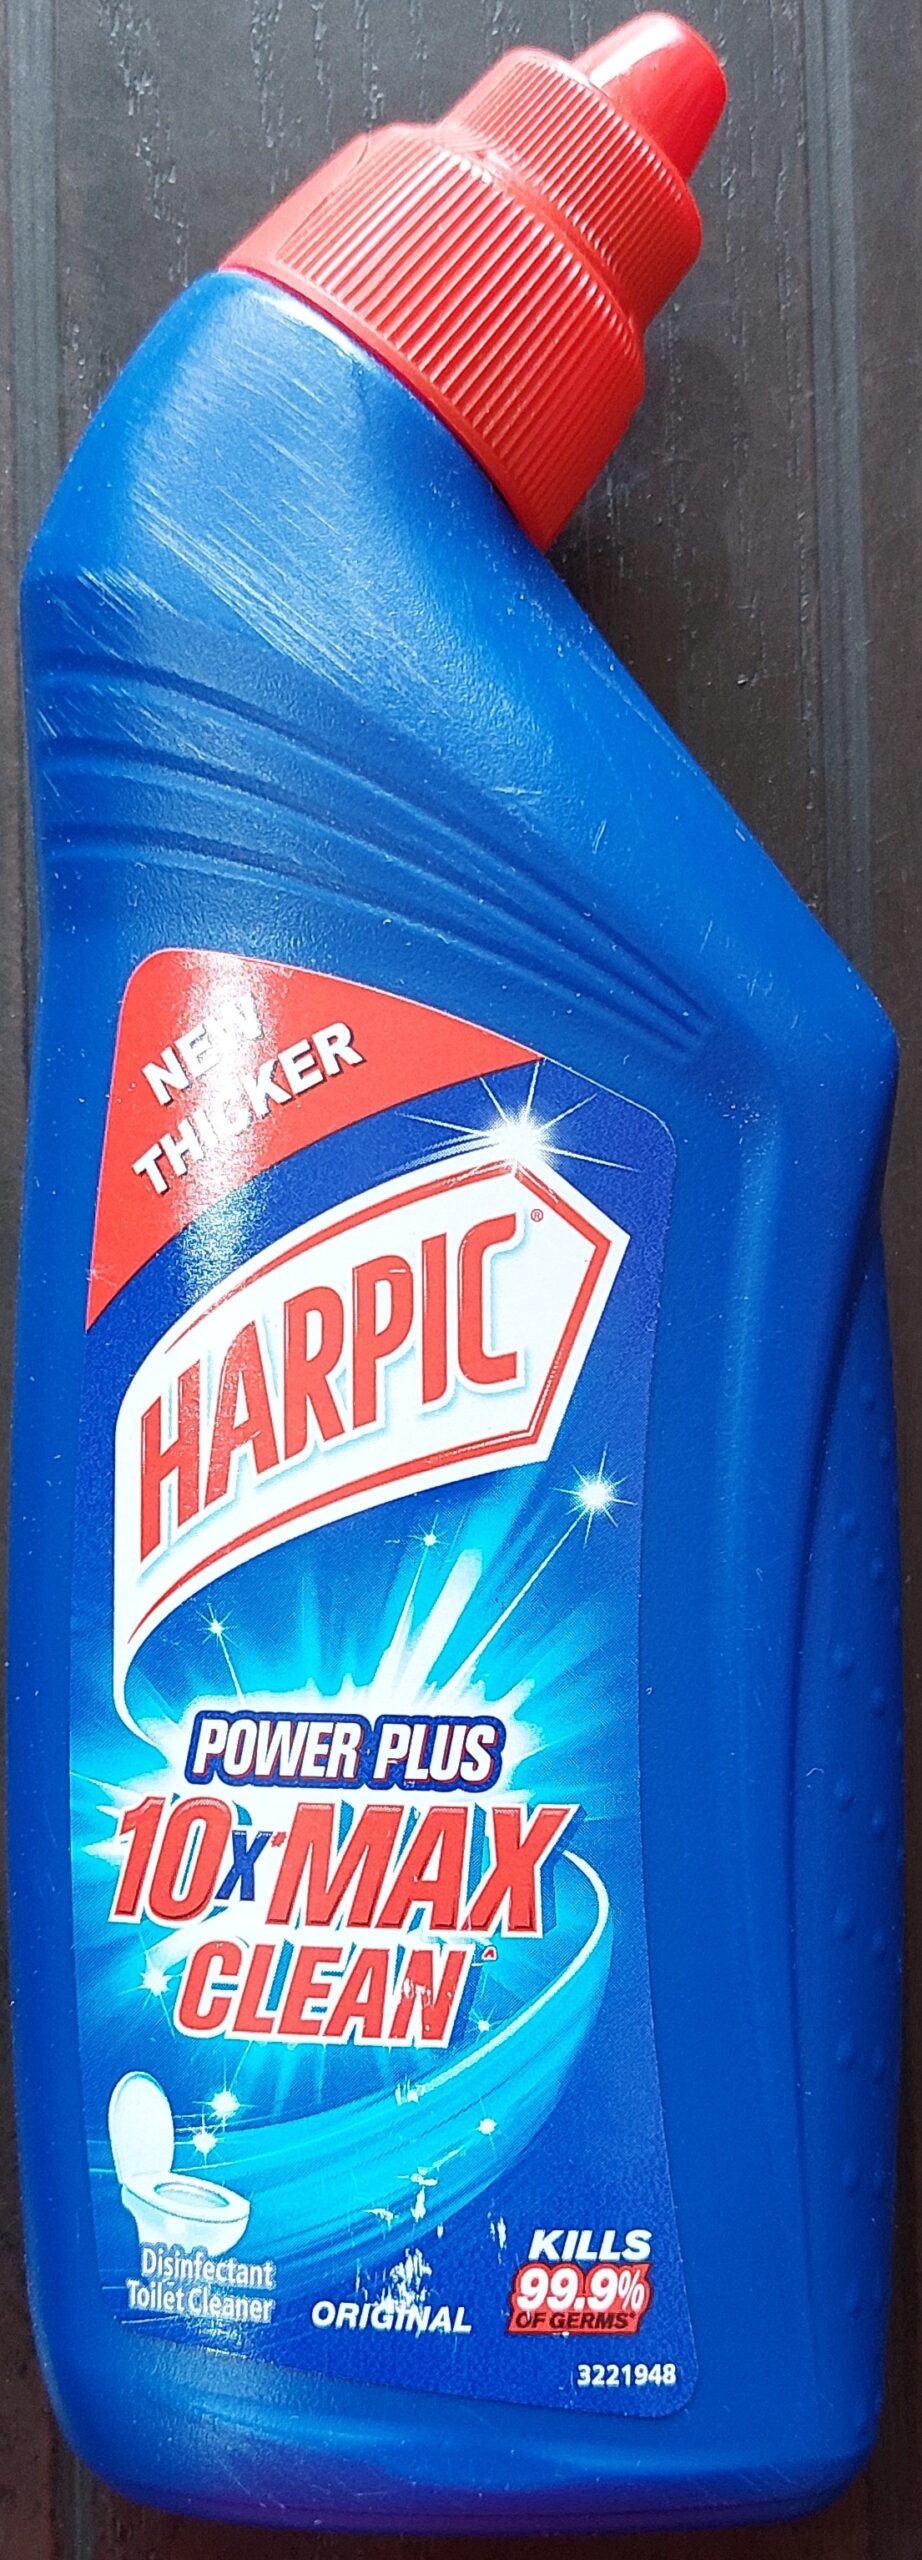 Harpic New thicker power plus 10x max clean toilet cleaner Liquid